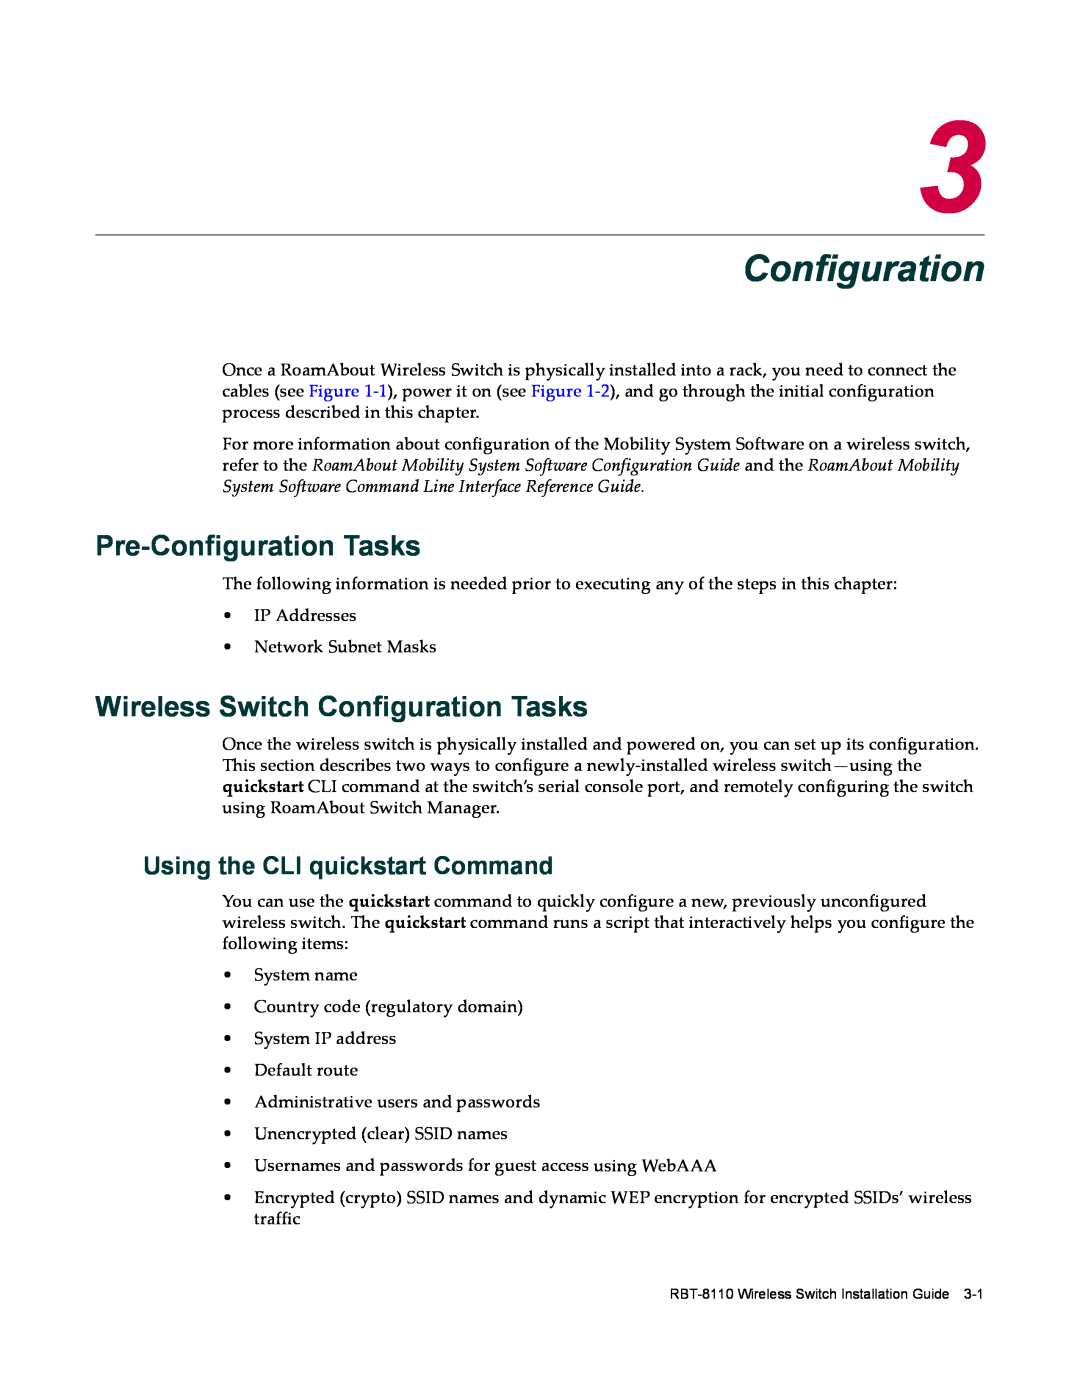 Enterasys Networks RBT-8110 manual Pre-Configuration Tasks, Wireless Switch Configuration Tasks 